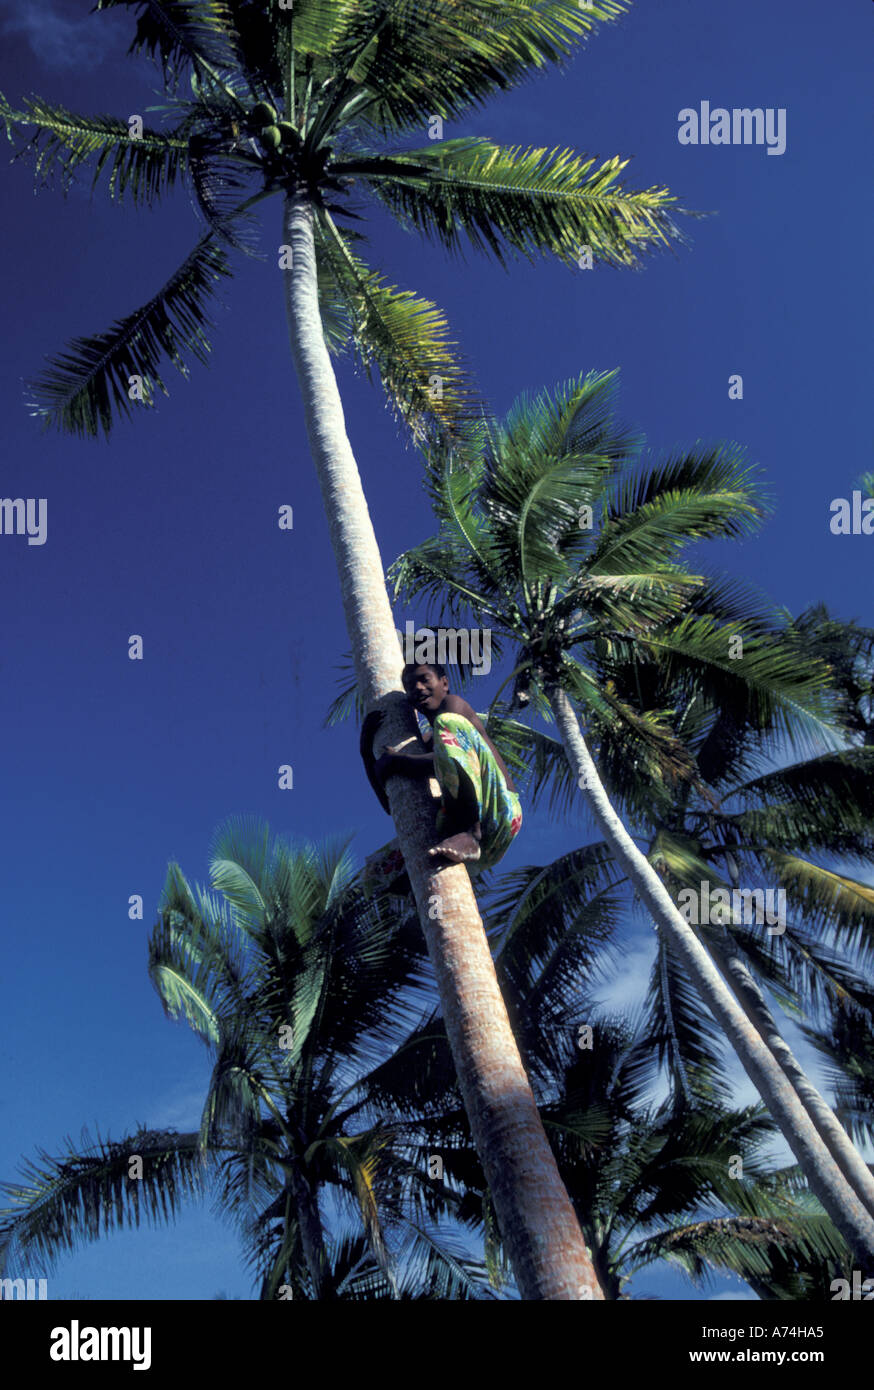 Fiji Islands, LaLa Resort, Boy climbing coconut tree Stock Photo